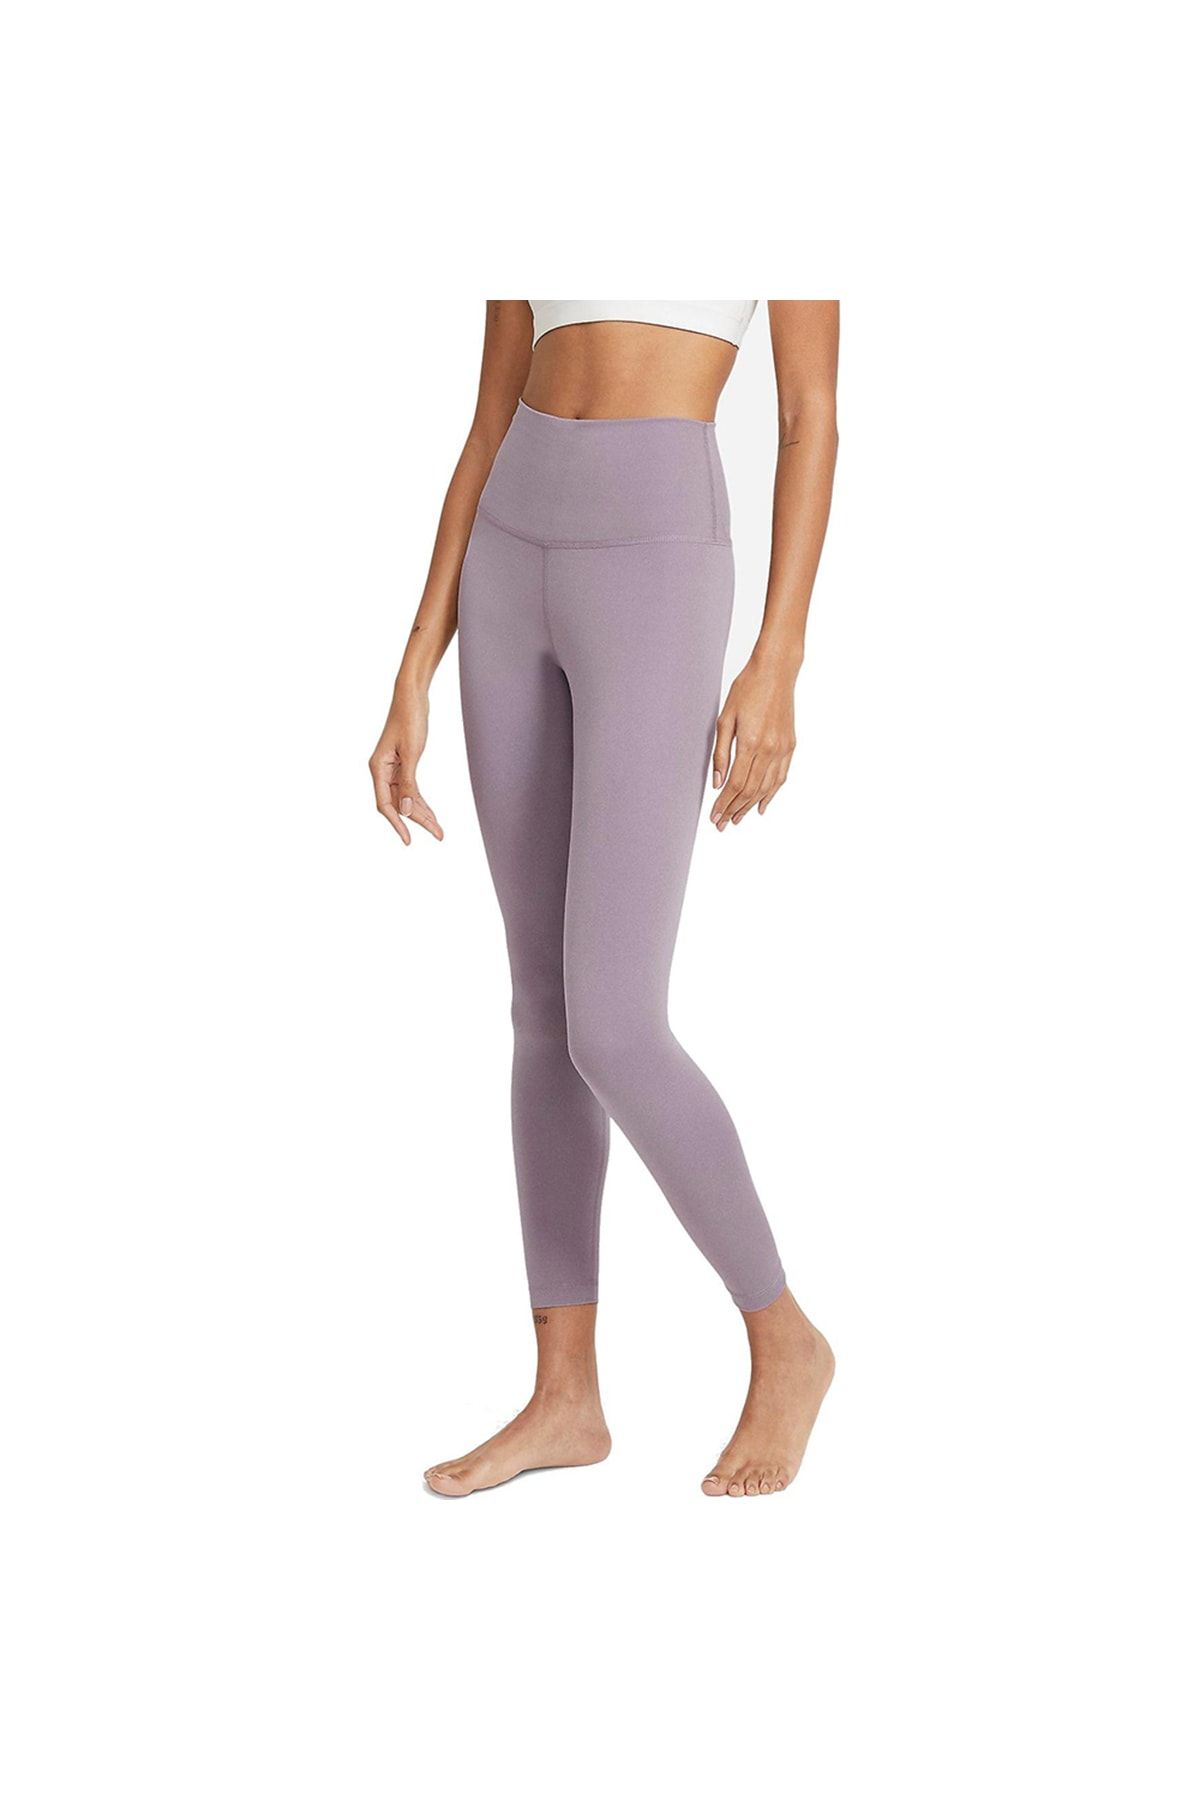 Nike Yoga 7/8 Tight Women's Purple Training Tights Cu5293-531